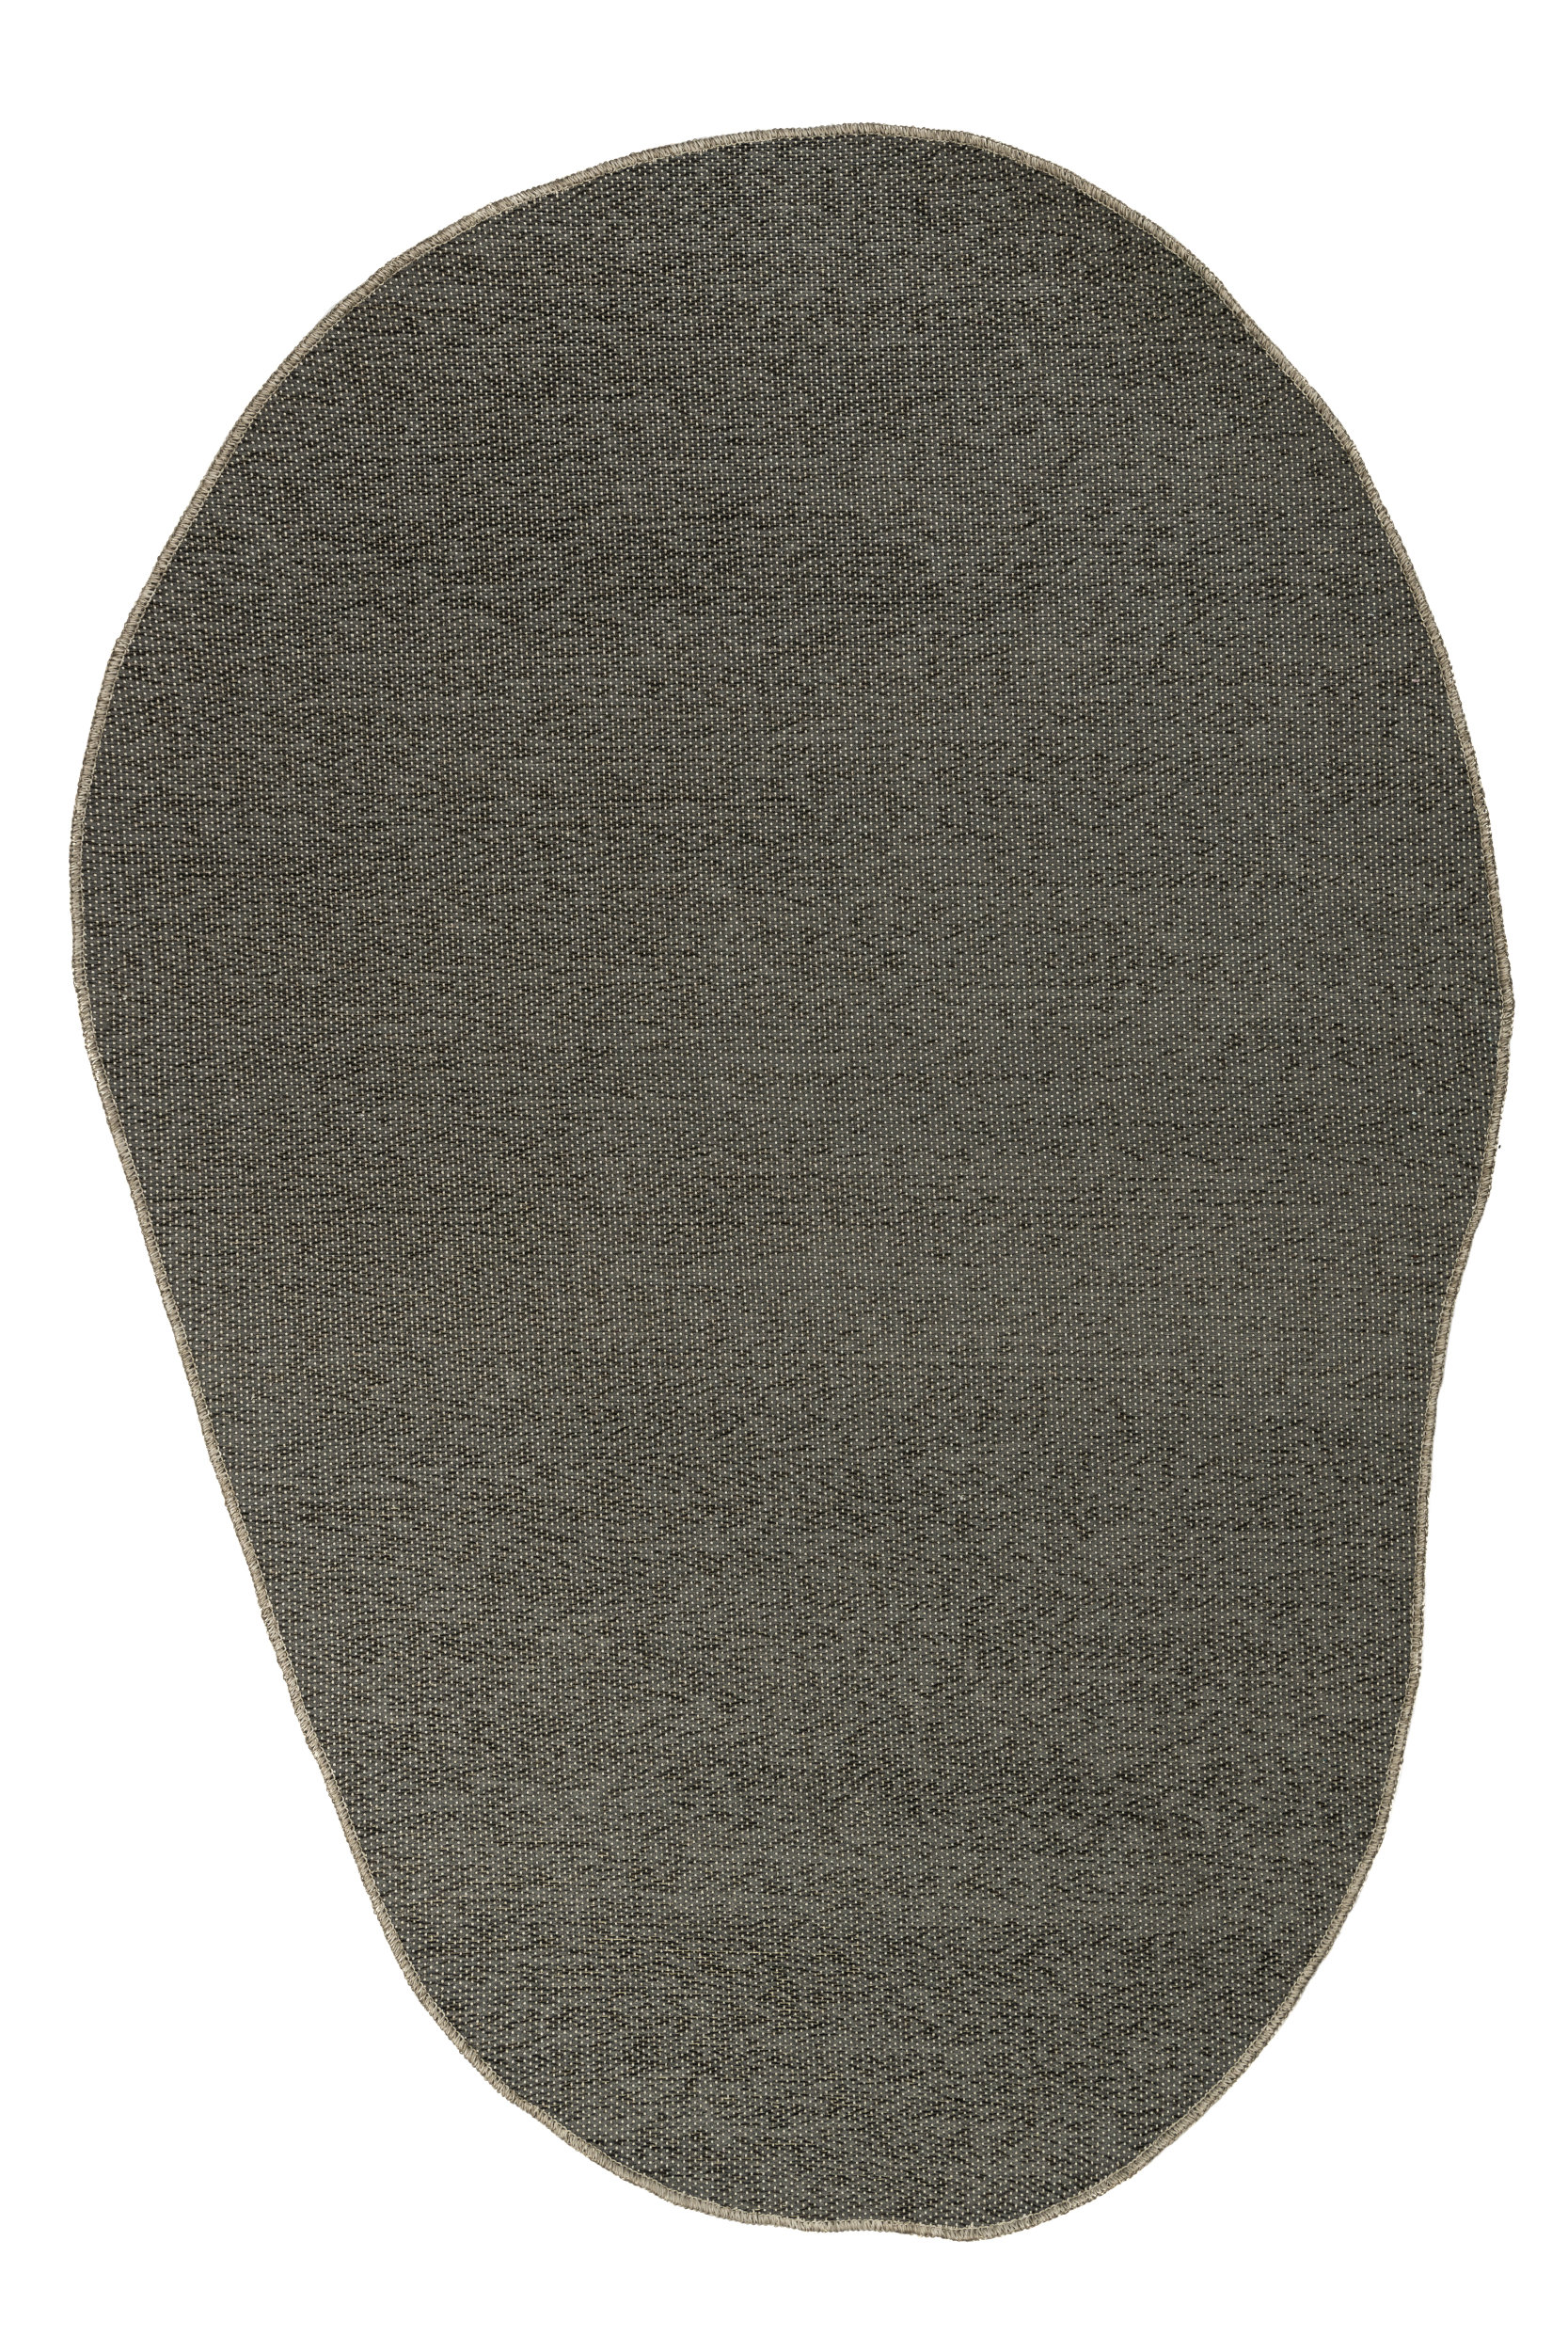 Silky Tweed Grey Roolf-HR-2500